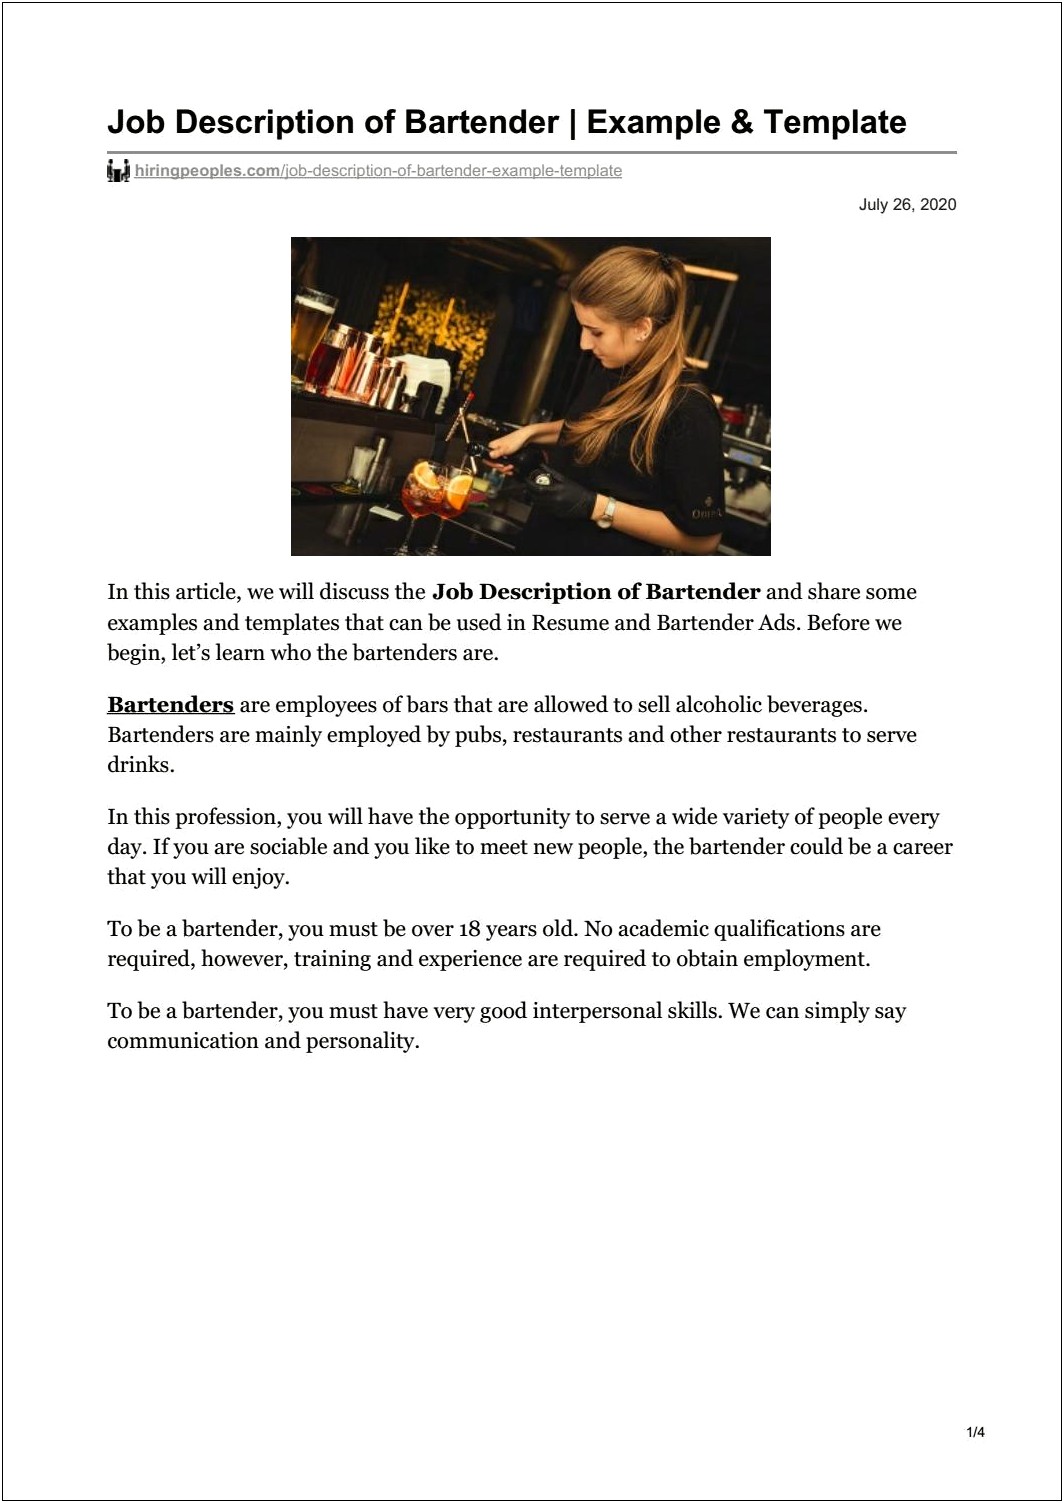 Brewery Bartender Job Description For Resume